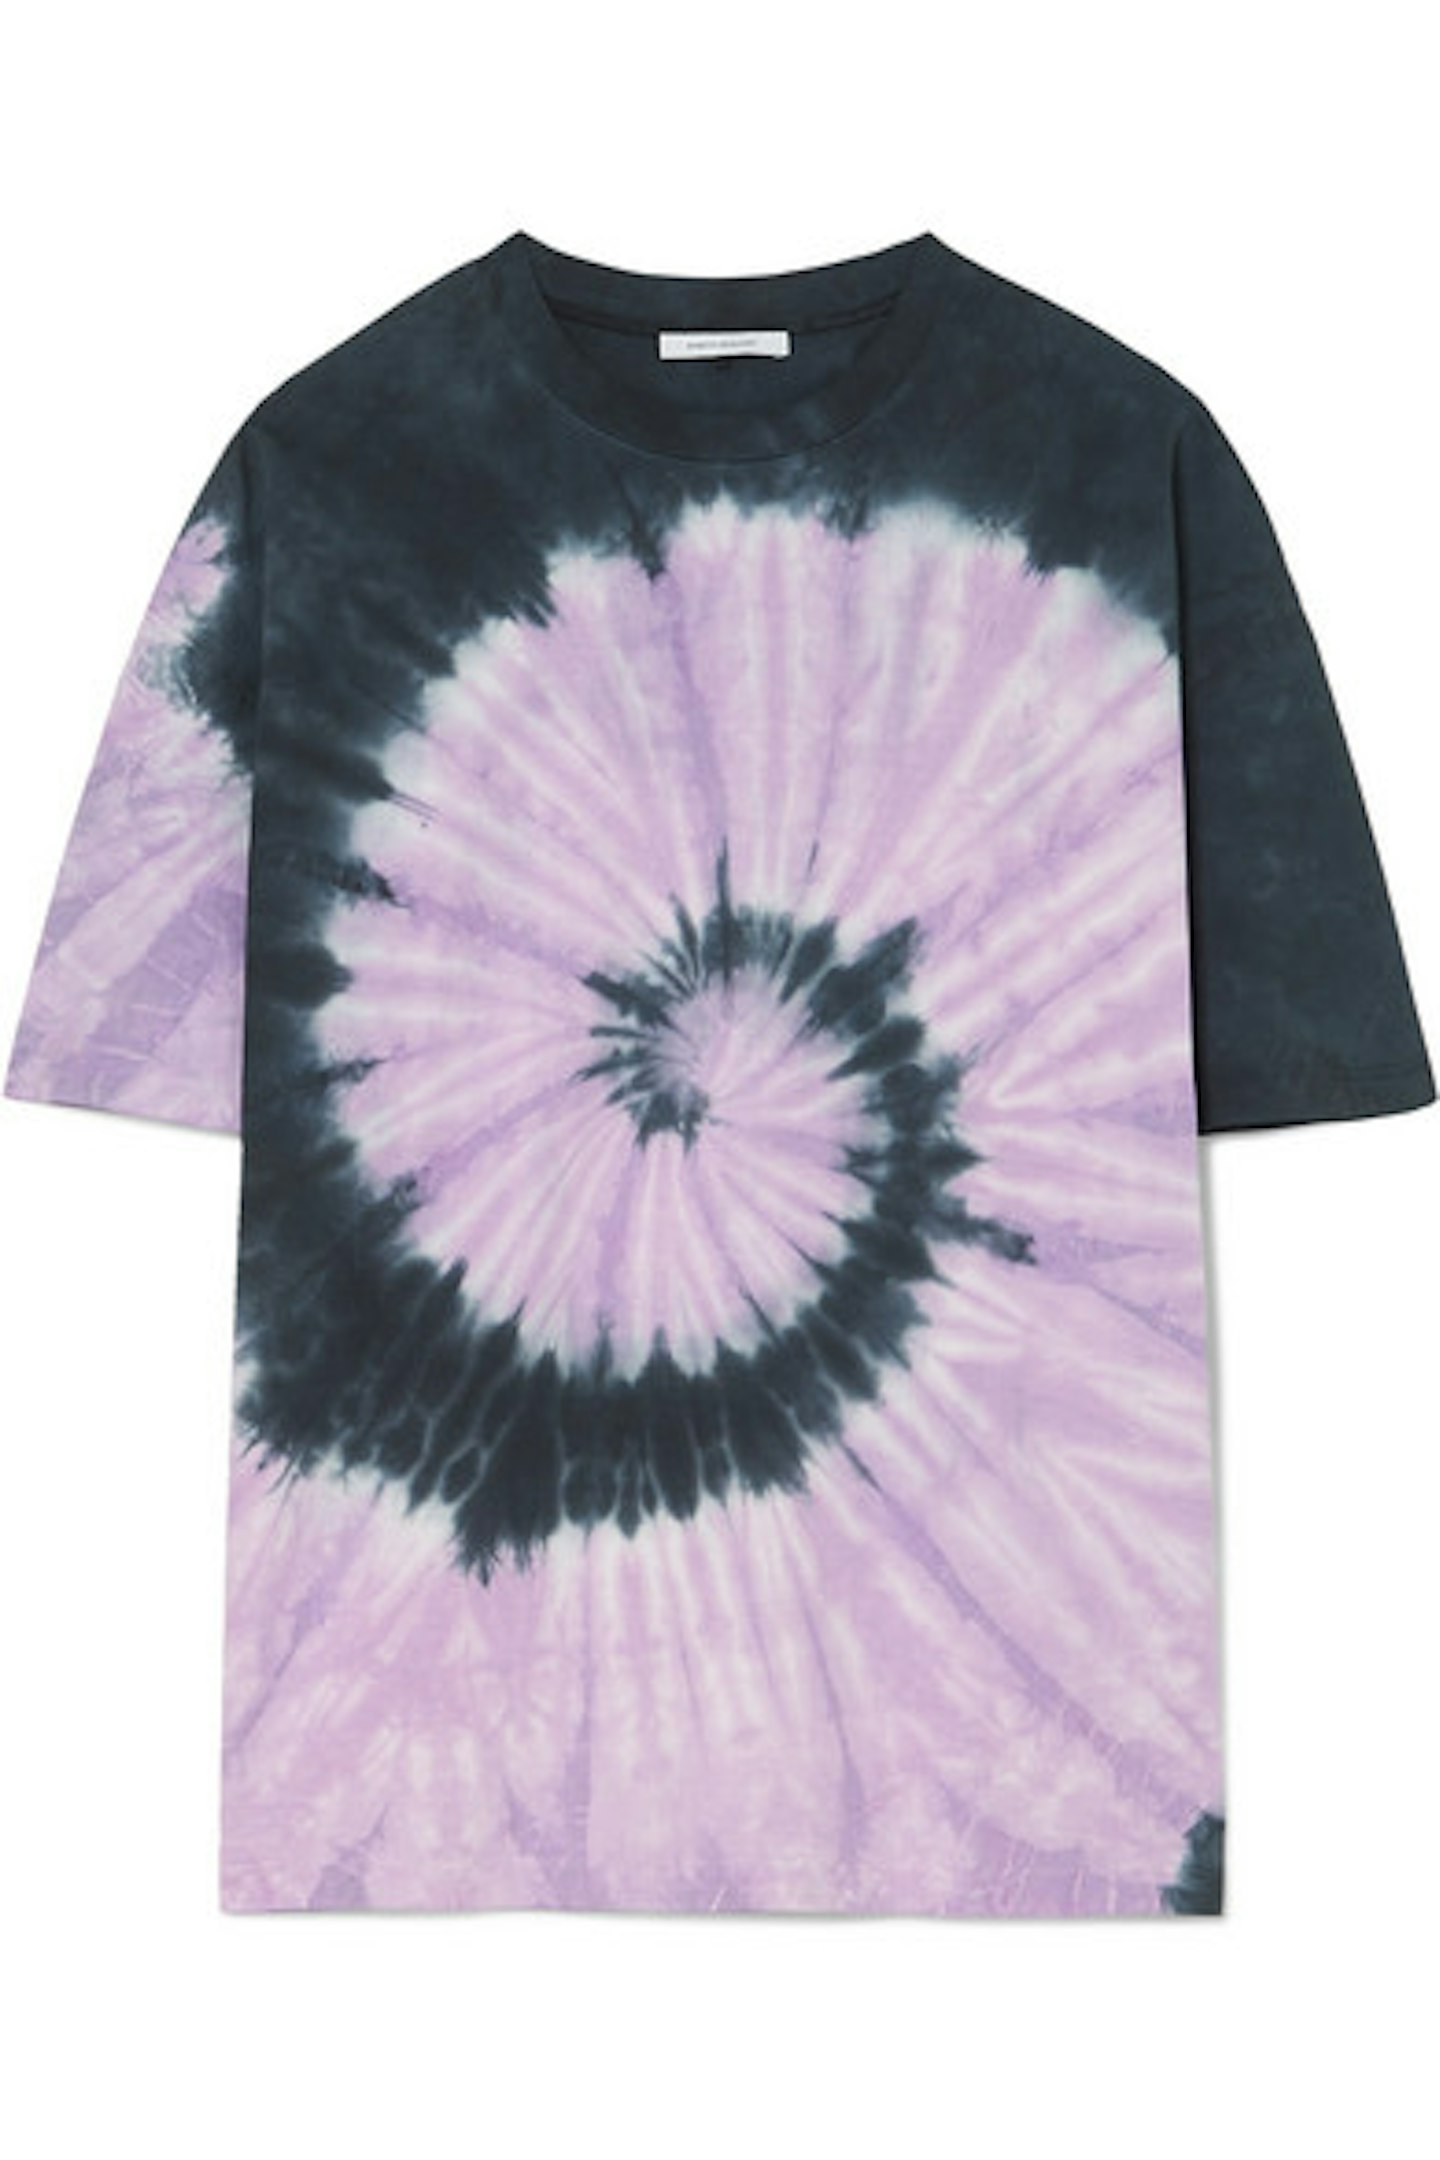 Ninety Percent + Net Sustain, Oversized Tie-Dyed Organic Cotton-Jersey T-Shirt, £50